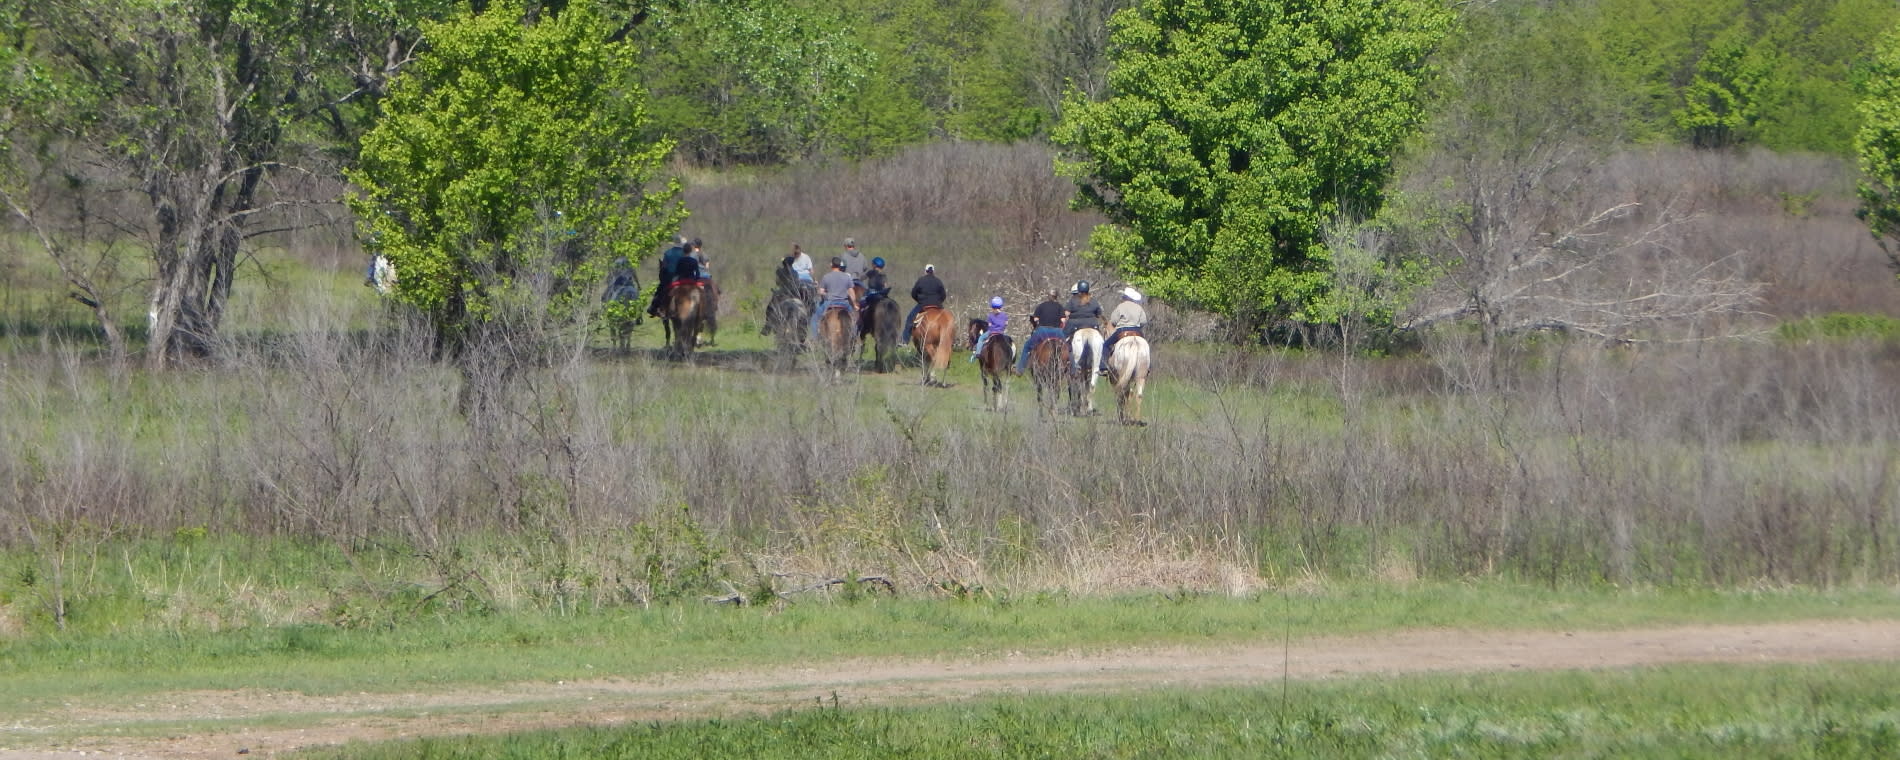 Equestrian Trail